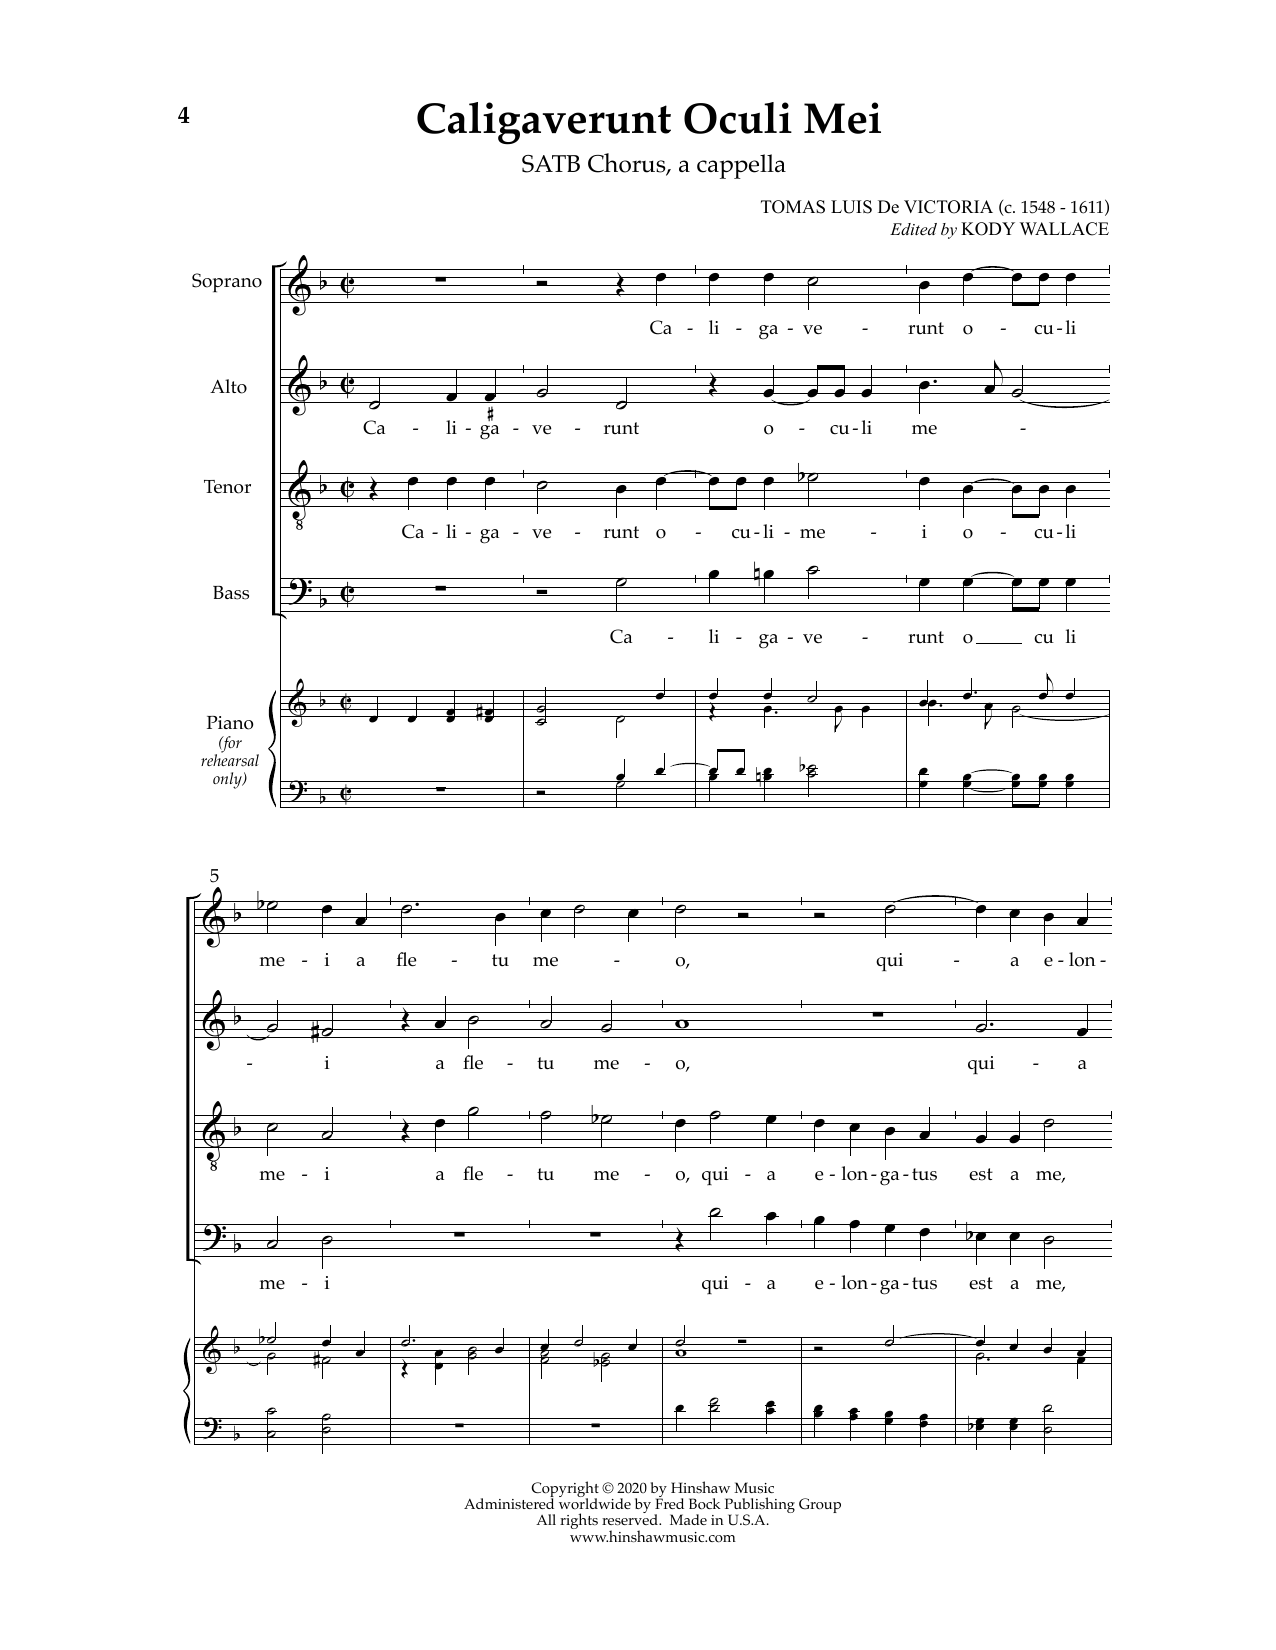 Tomas Luis de Victoria Caligaverunt Oculi Mei Sheet Music Notes & Chords for SATB Choir - Download or Print PDF